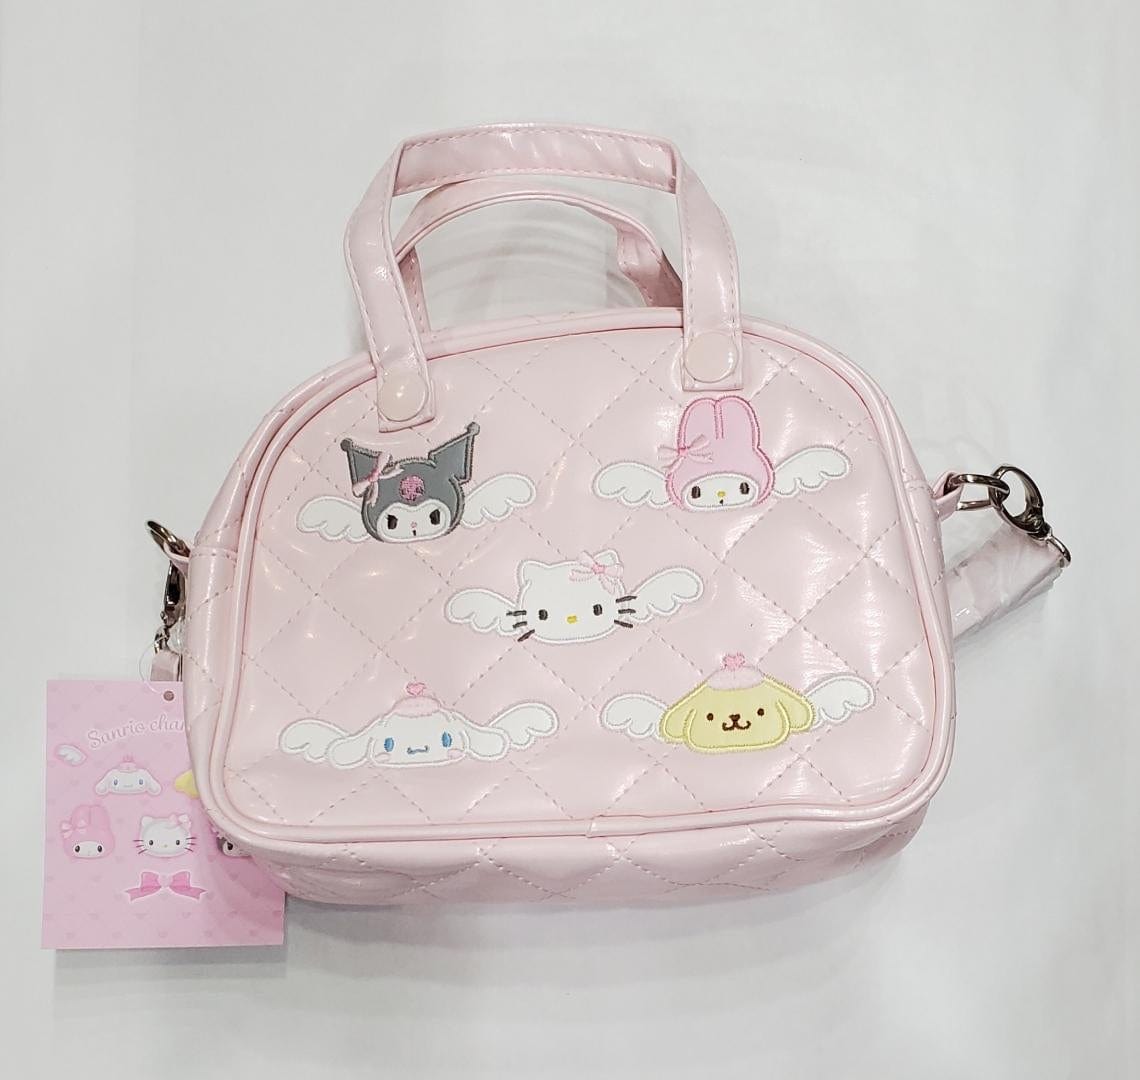 Enesco Sanrio Dreamy Mini Shoulder Bag Kawaii Gifts 4550337074114